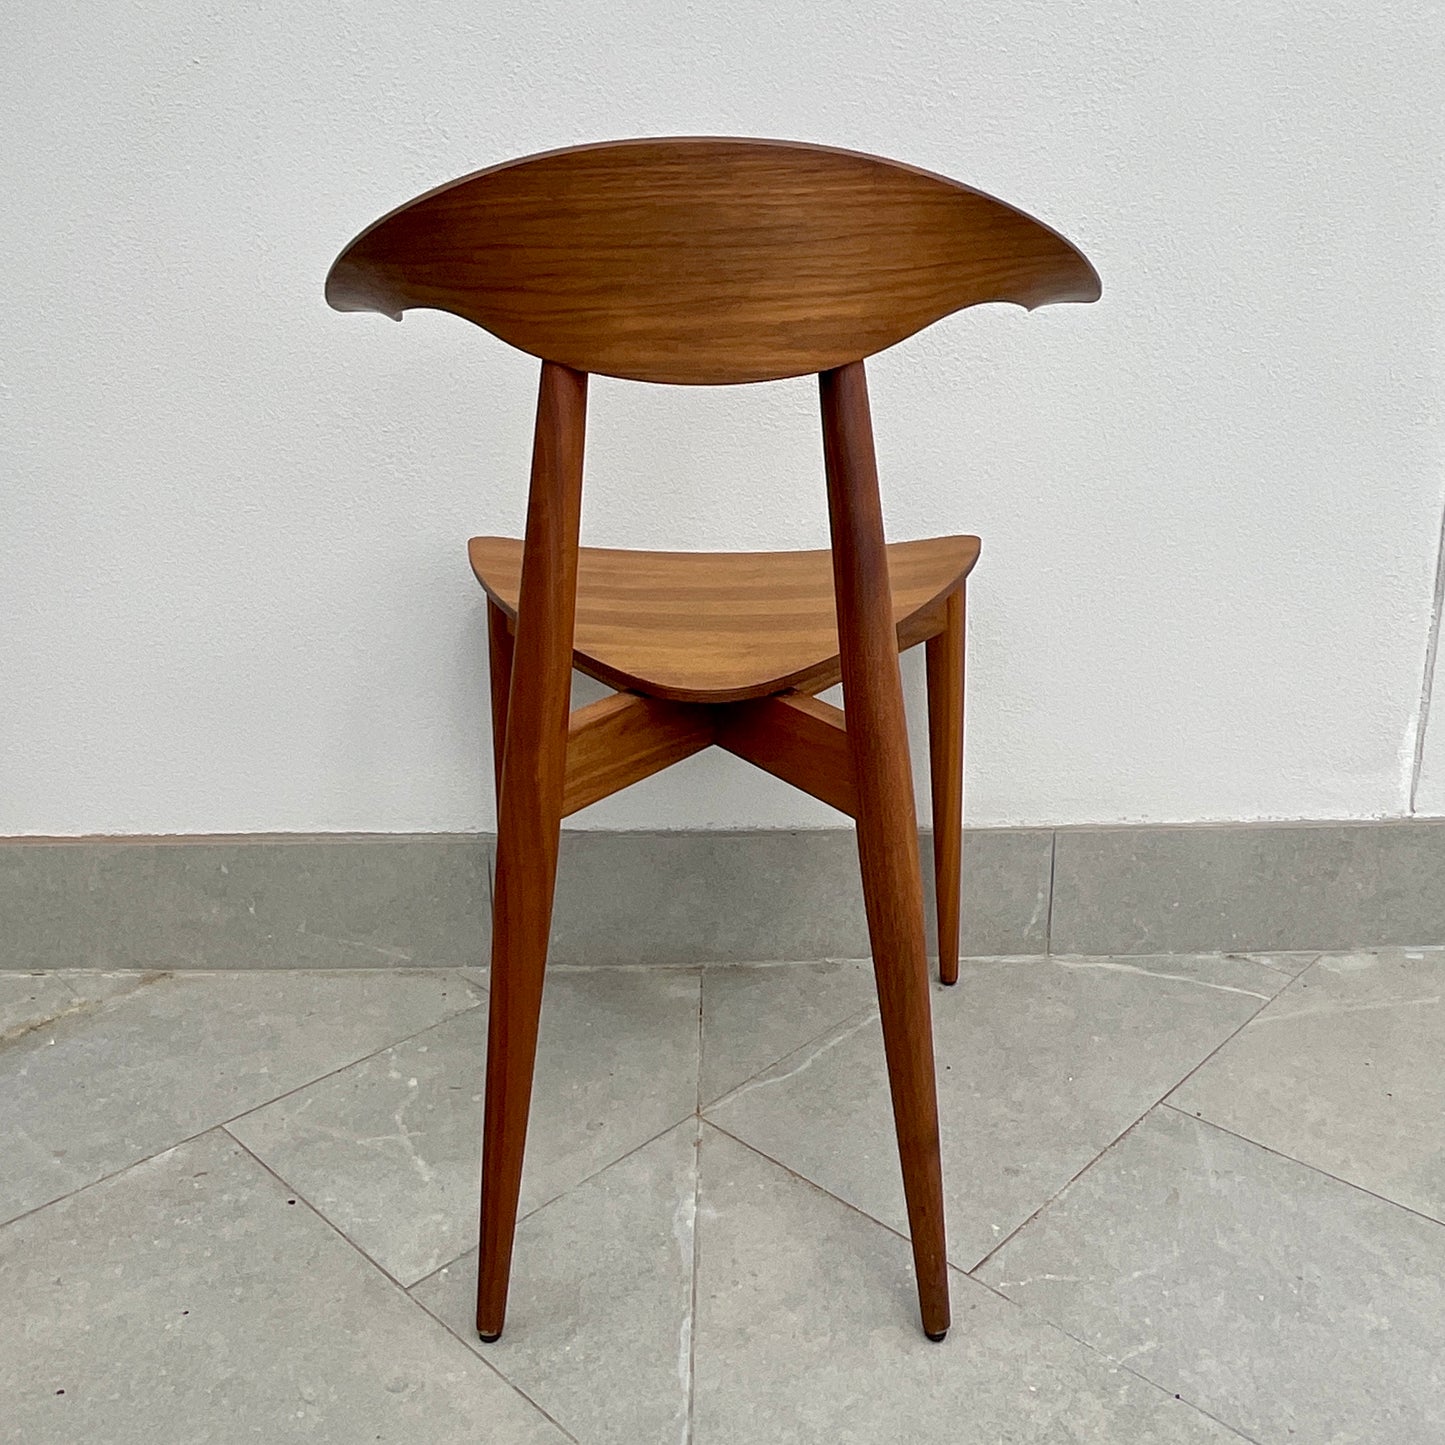 Manta Dining Chair by Matthew Hilton for De La Espada (2 available)